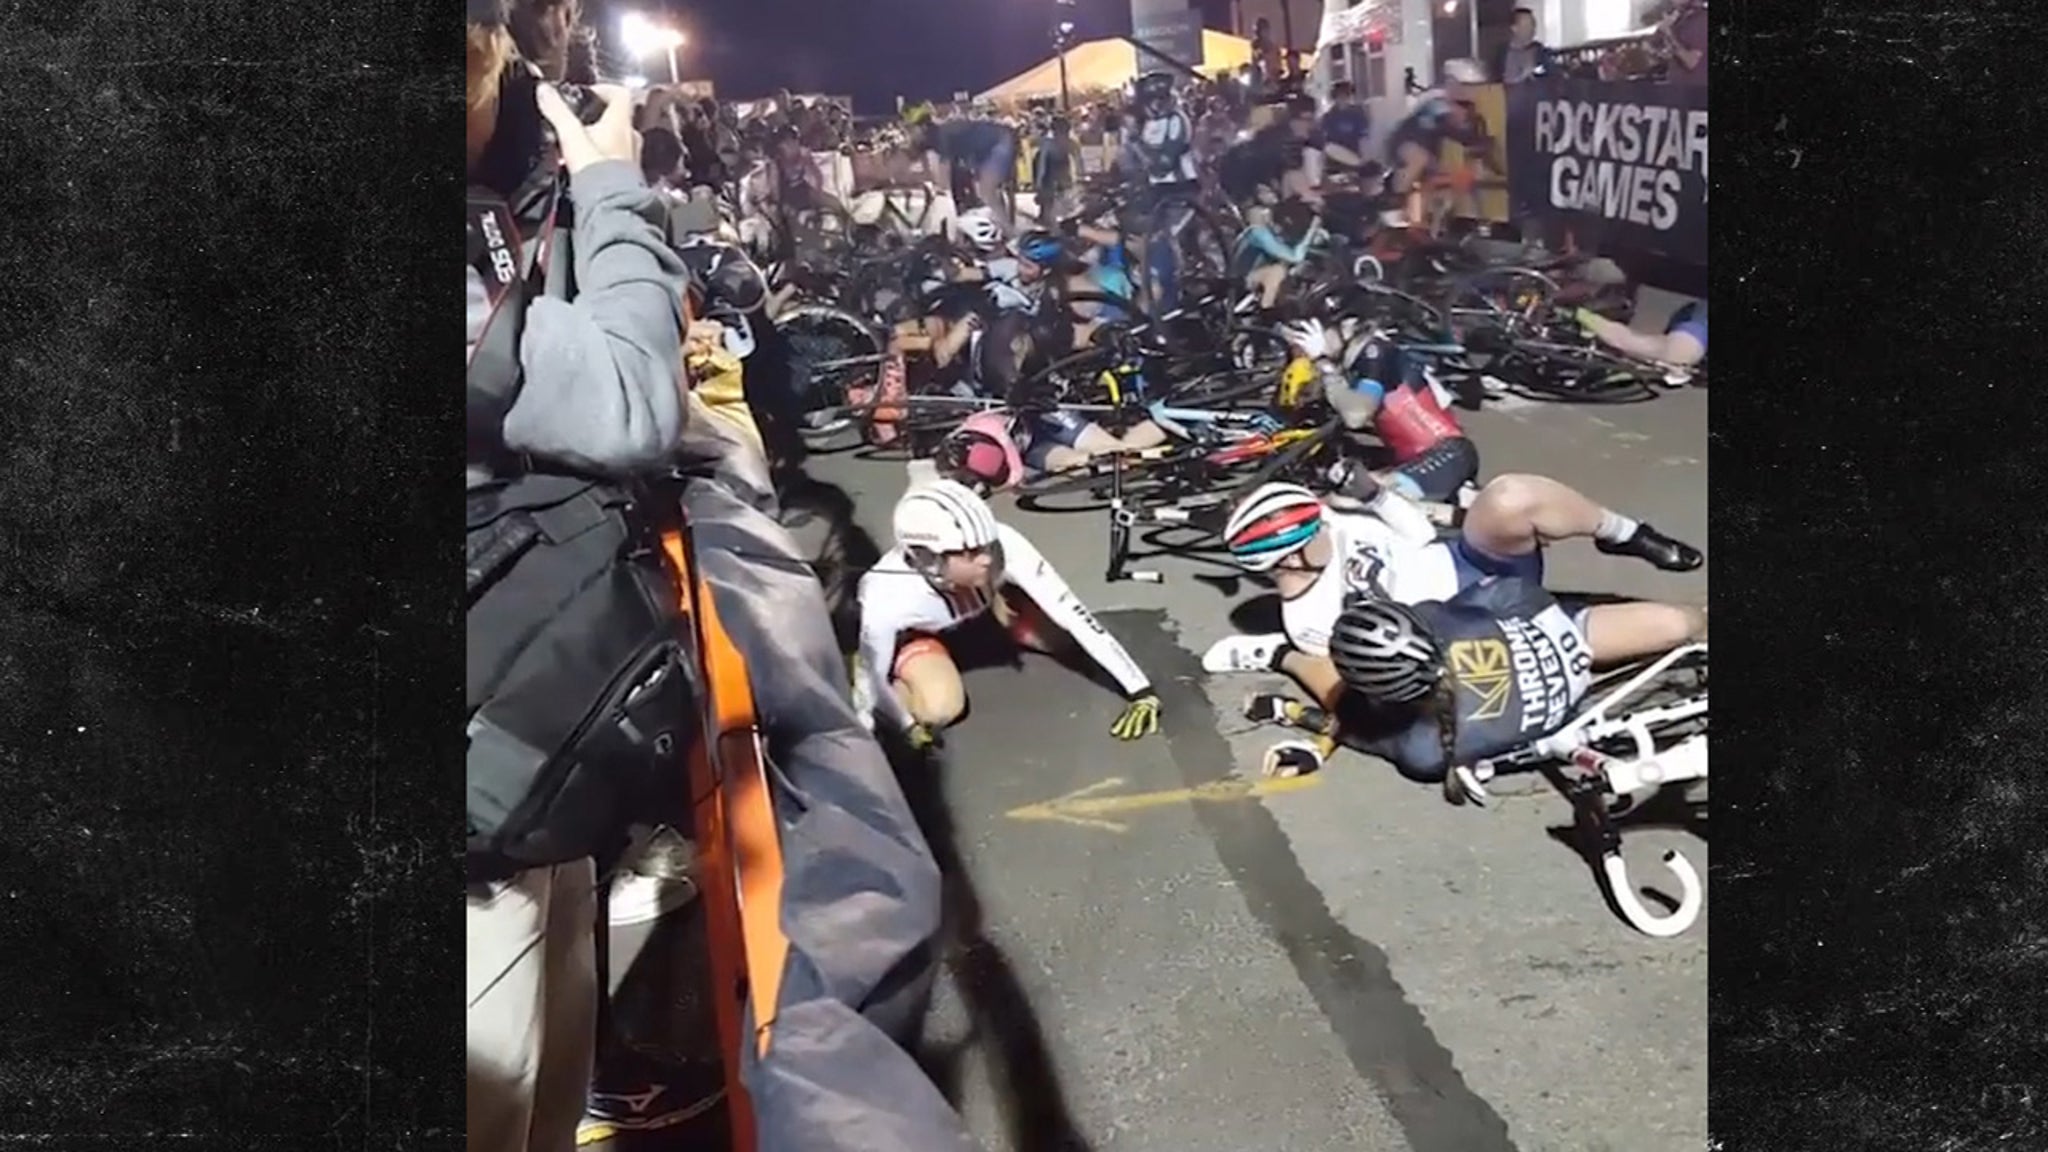 NYC CYCLING RACE MASSIVE BIKE CRASH CAUGHT ON VIDEO